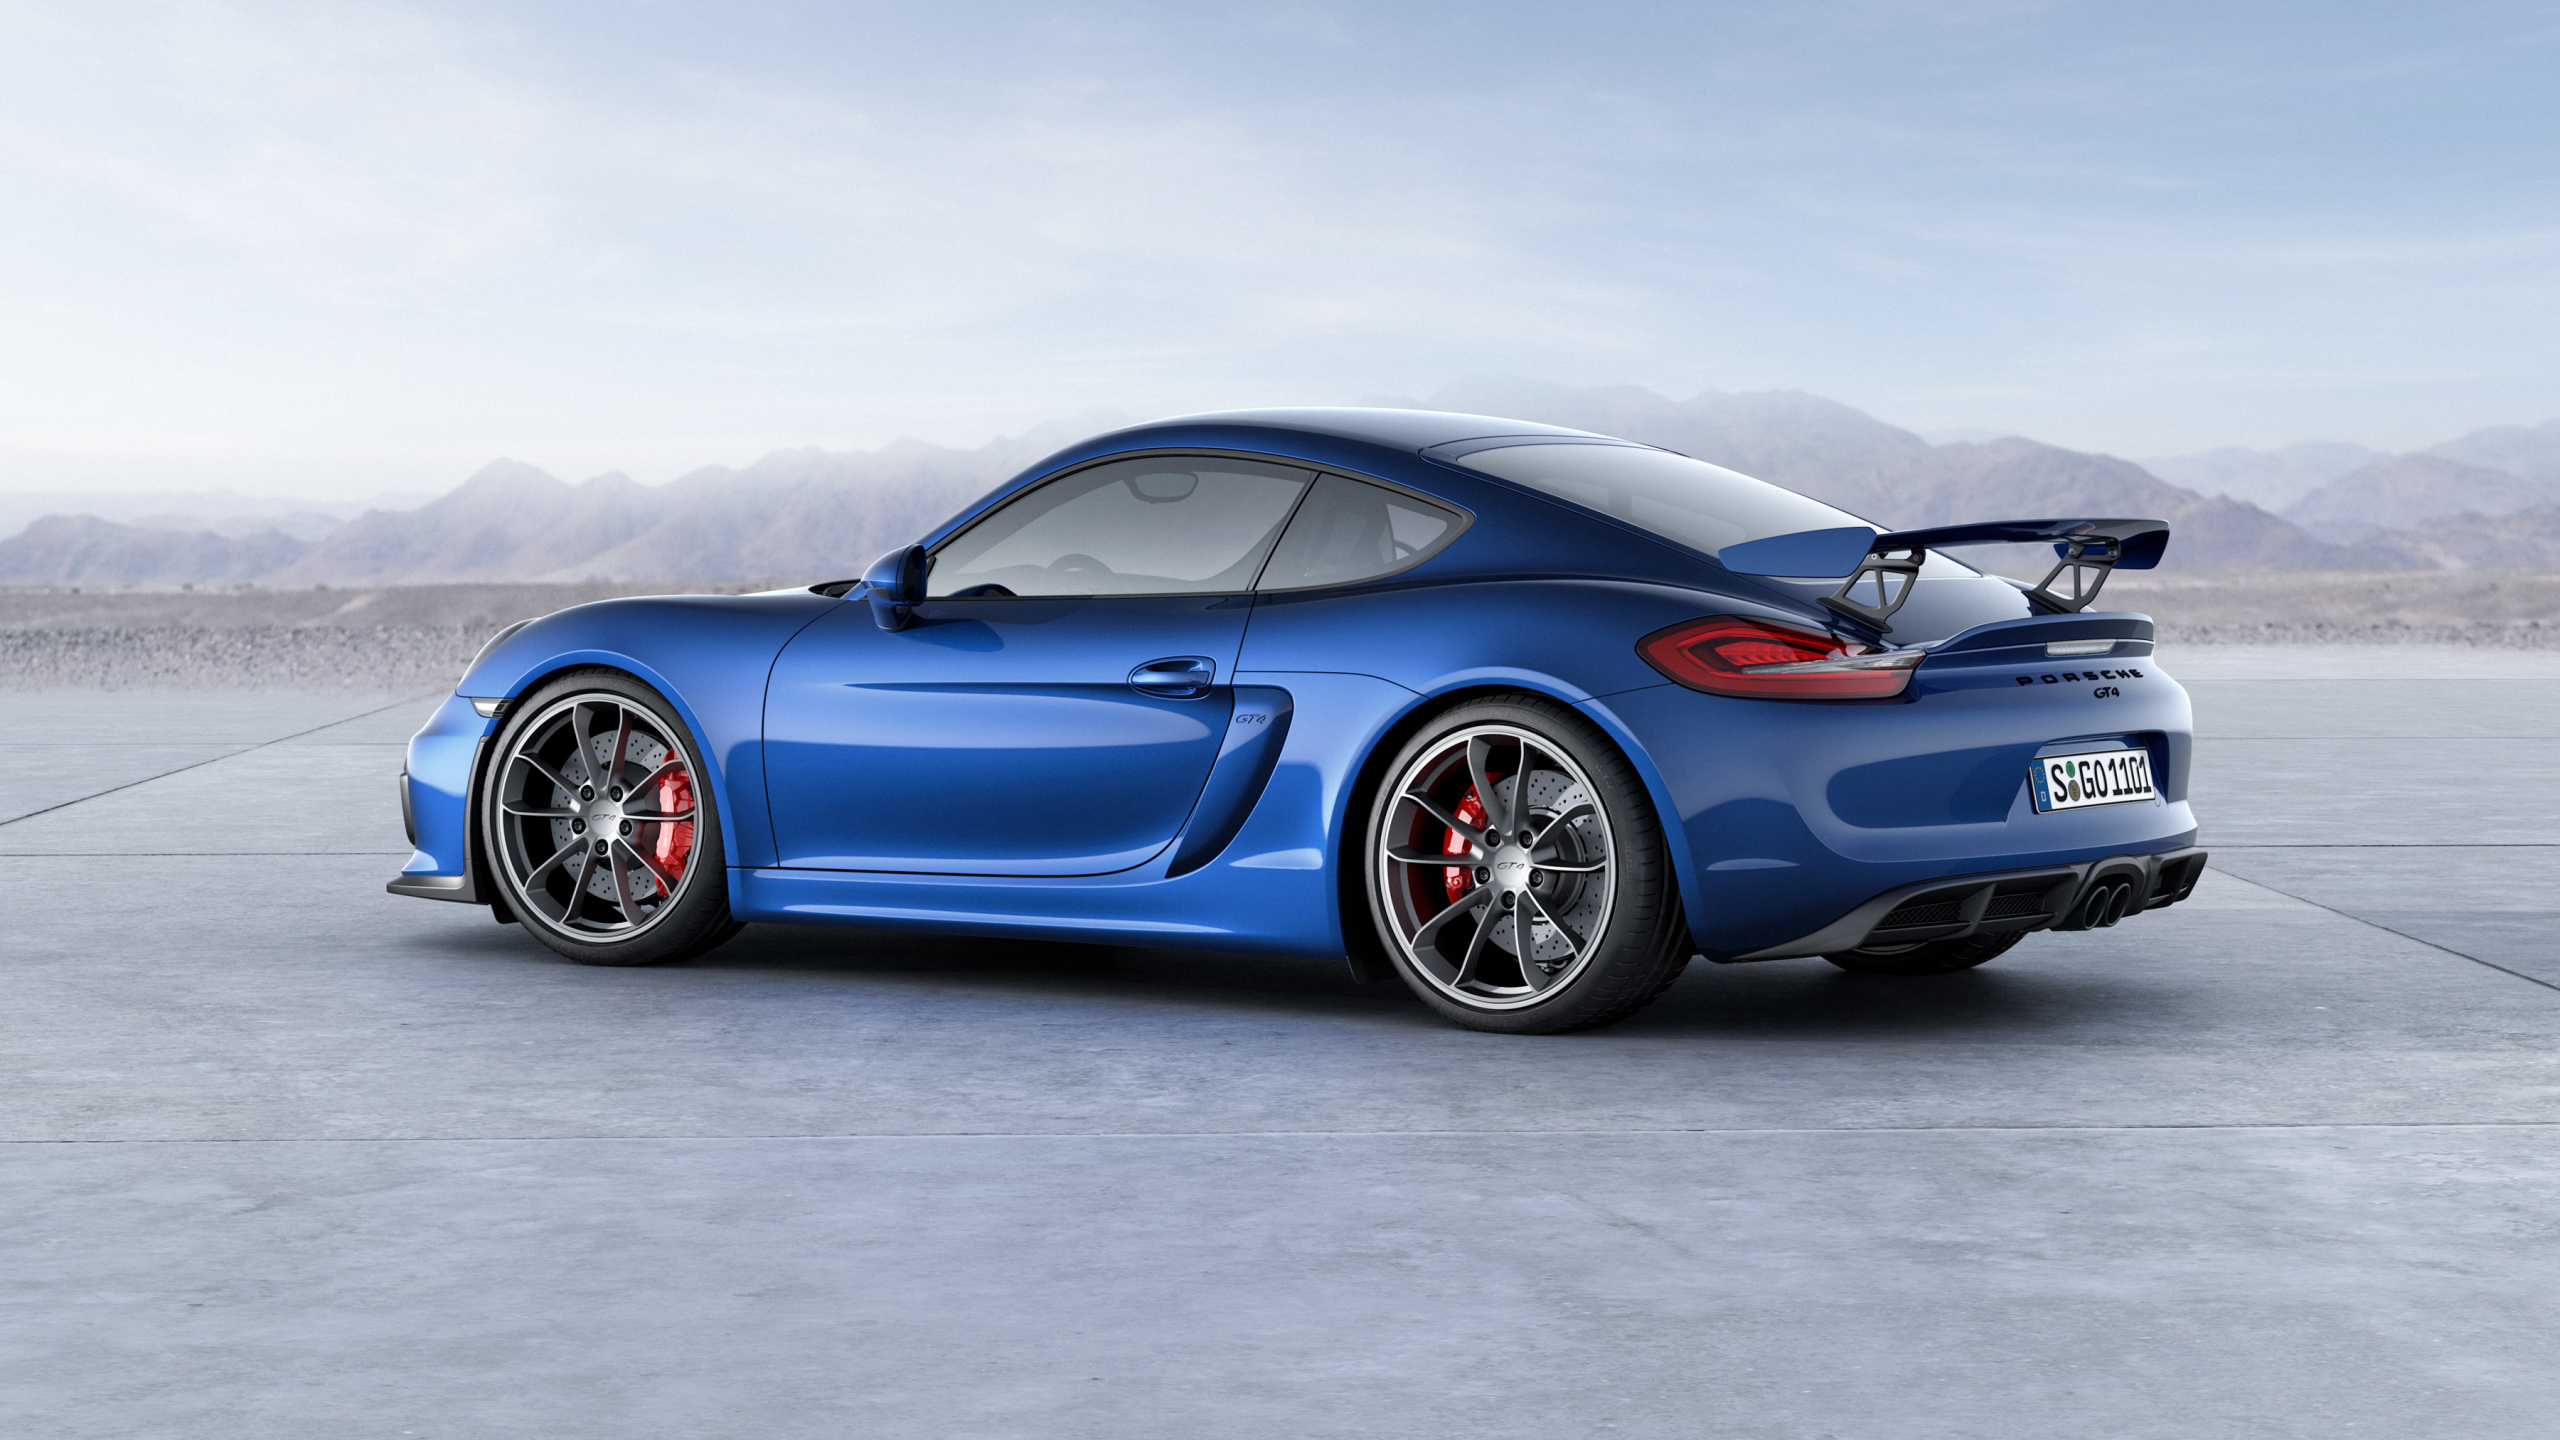 Blue Porsche 911 on Gray Concrete Pavement. Wallpaper in 2560x1440 Resolution